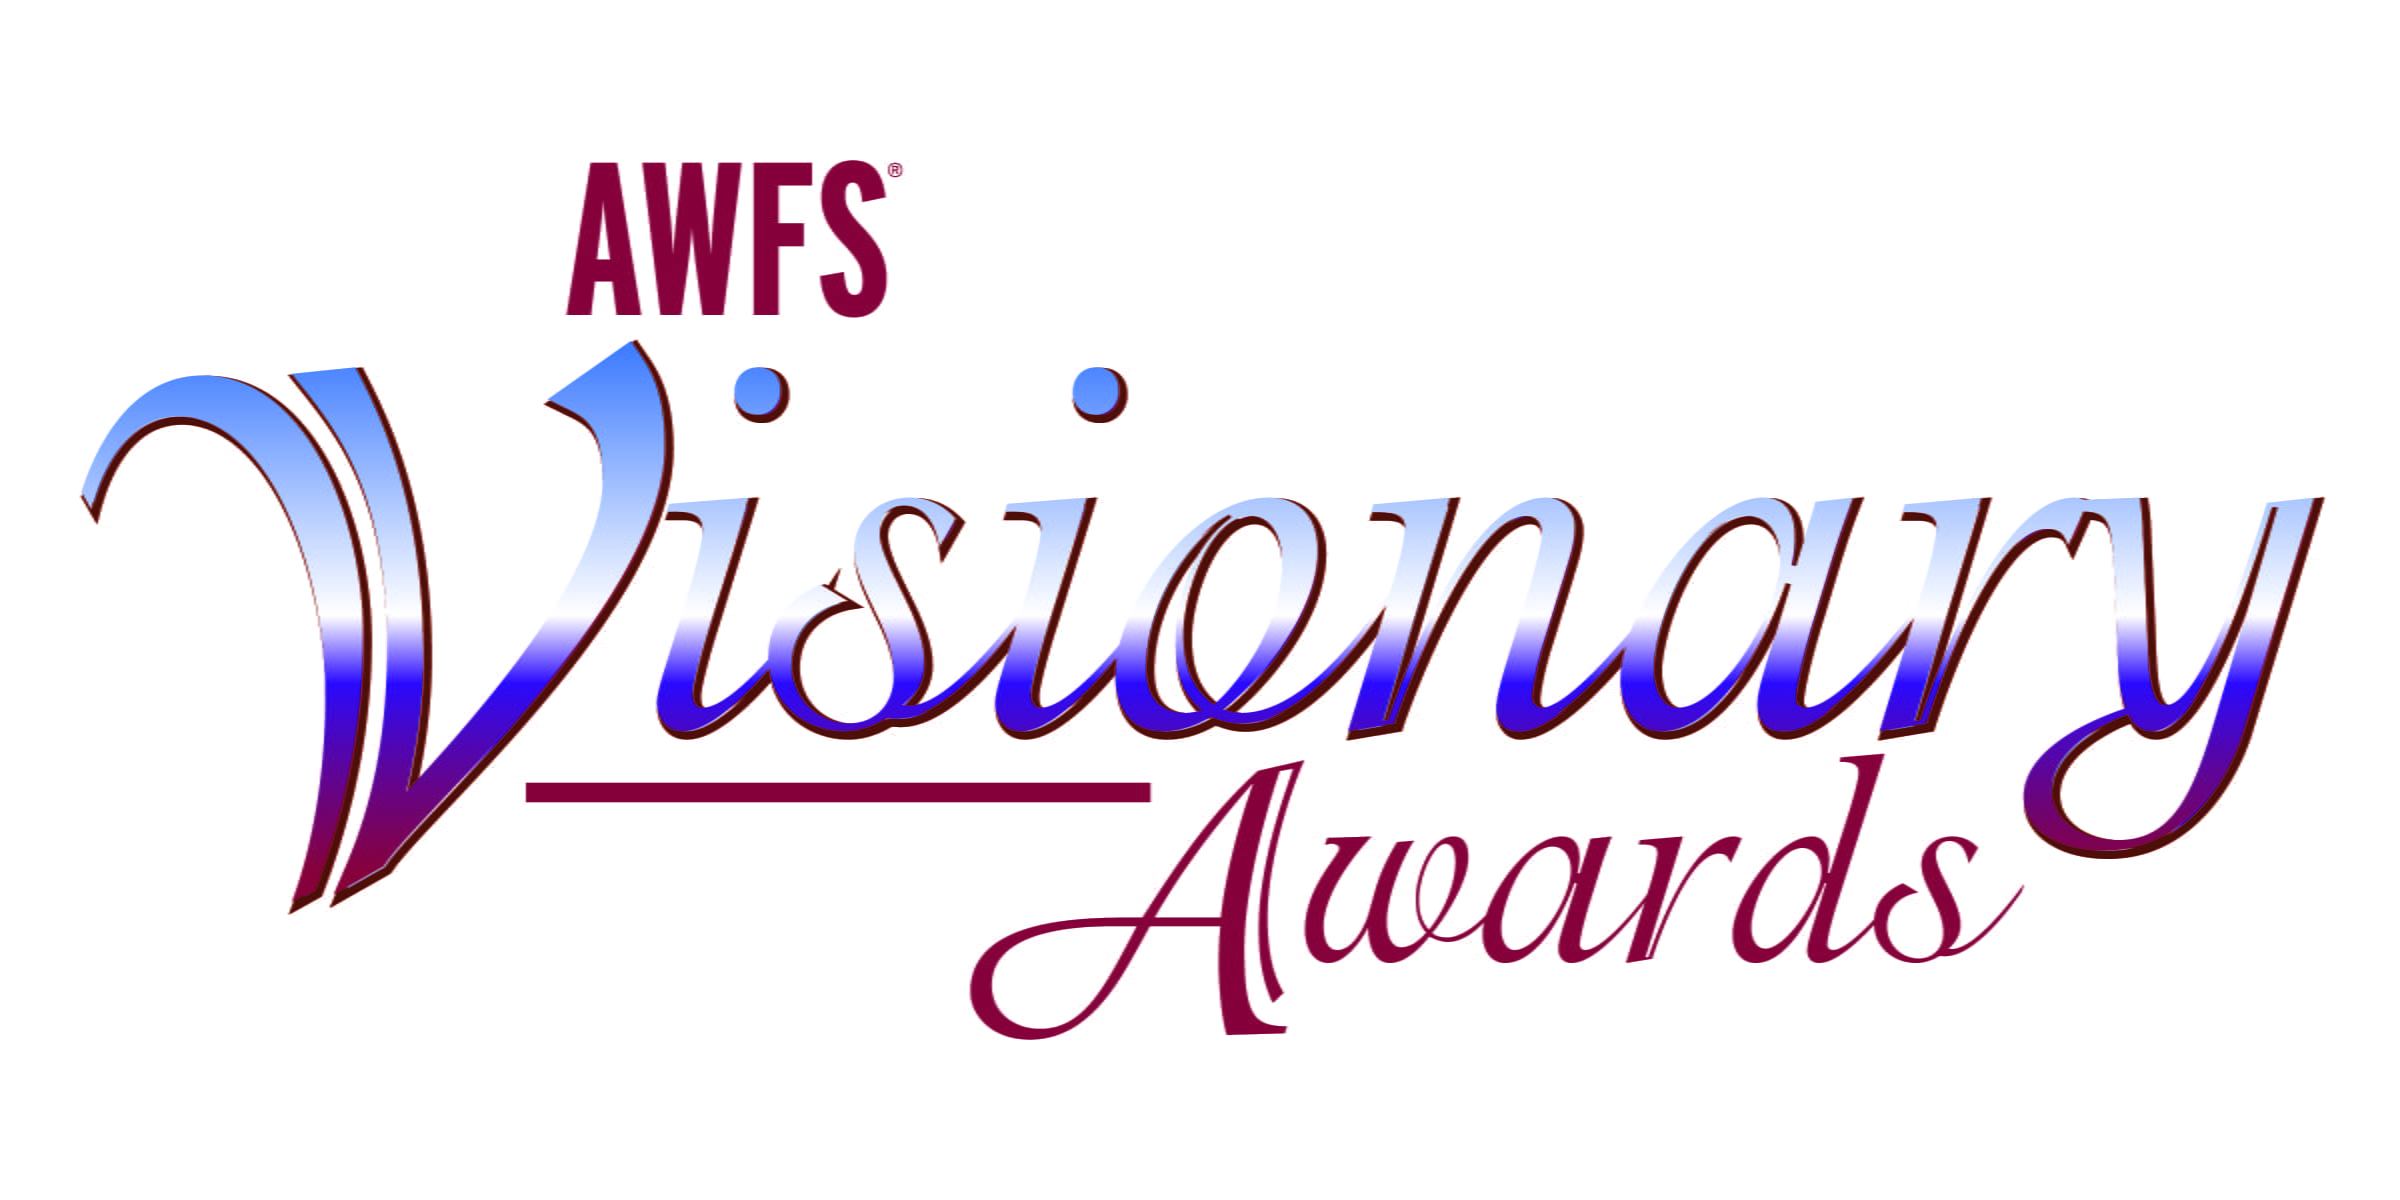 AWFS Visionary Awards logo